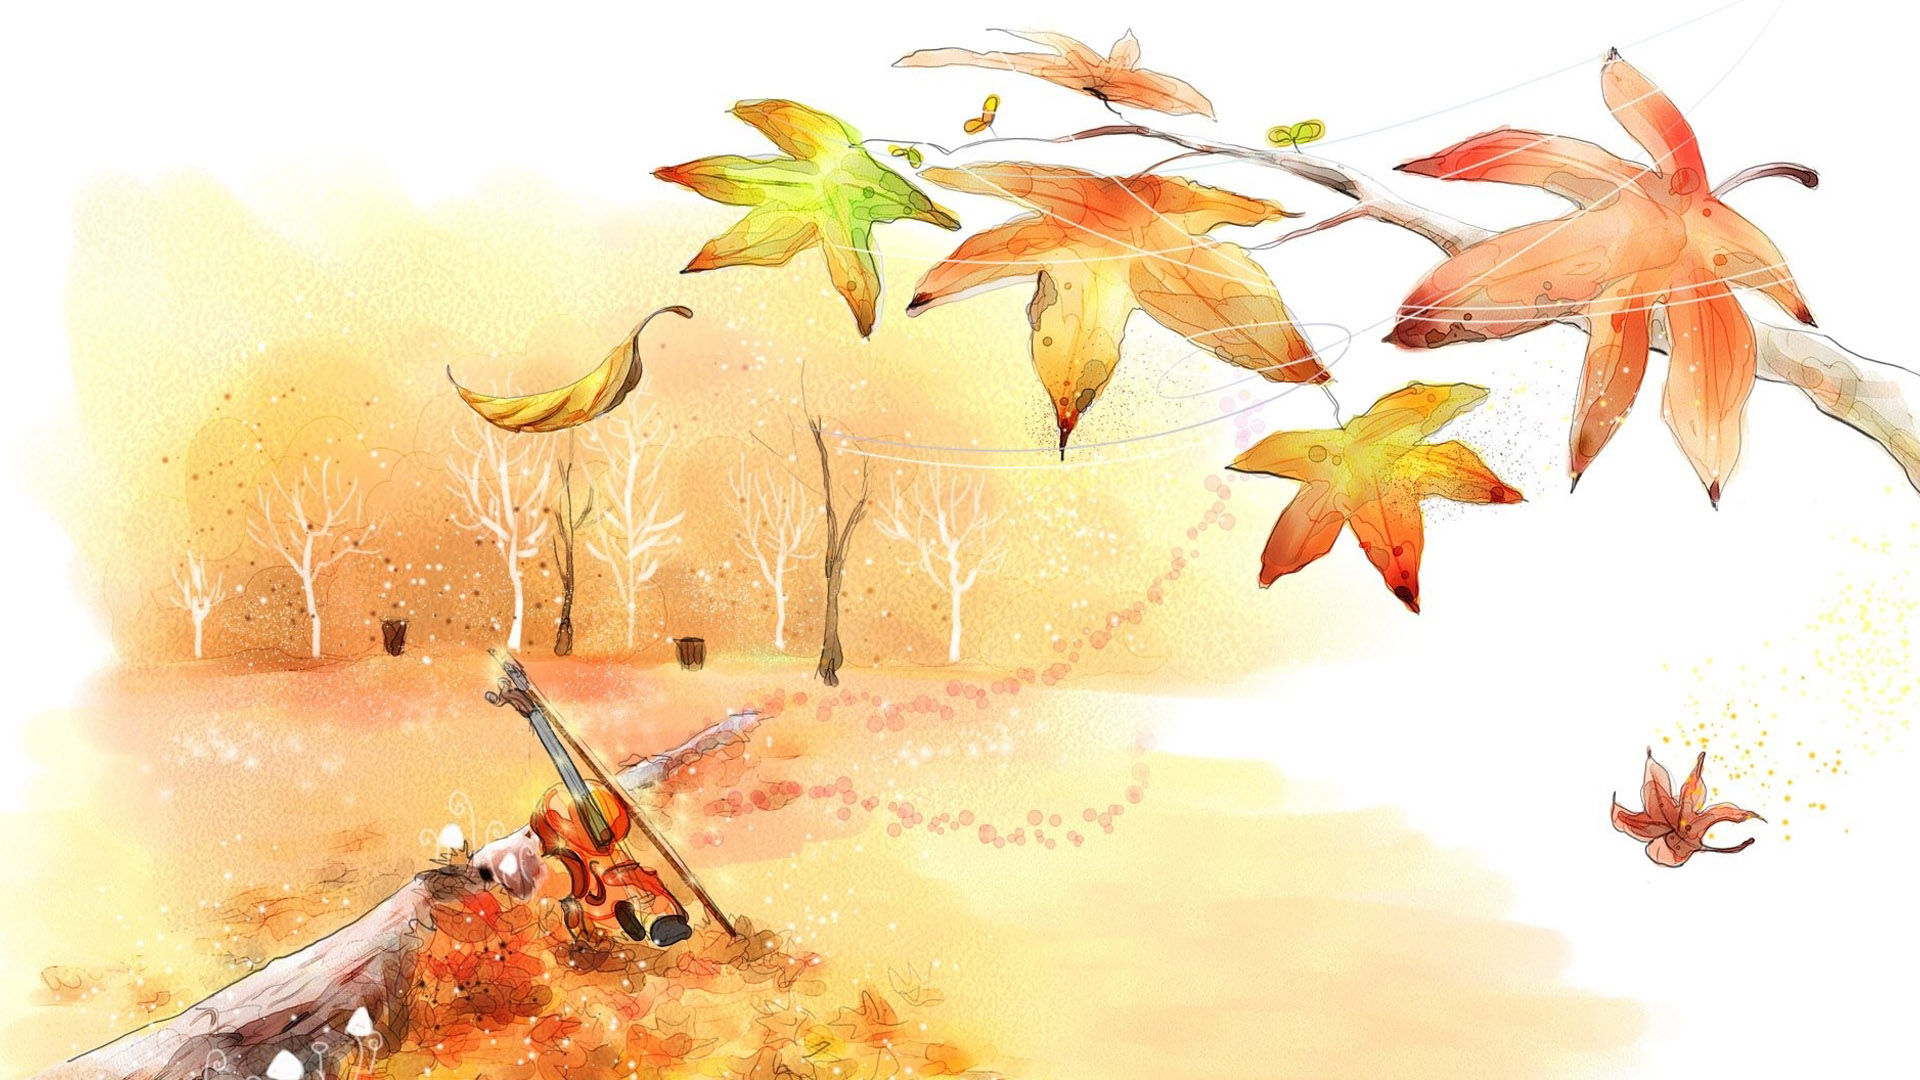 Violin In The Park, Autumn, Tree, Digital Art Desktop PC And Mac Wallpaper